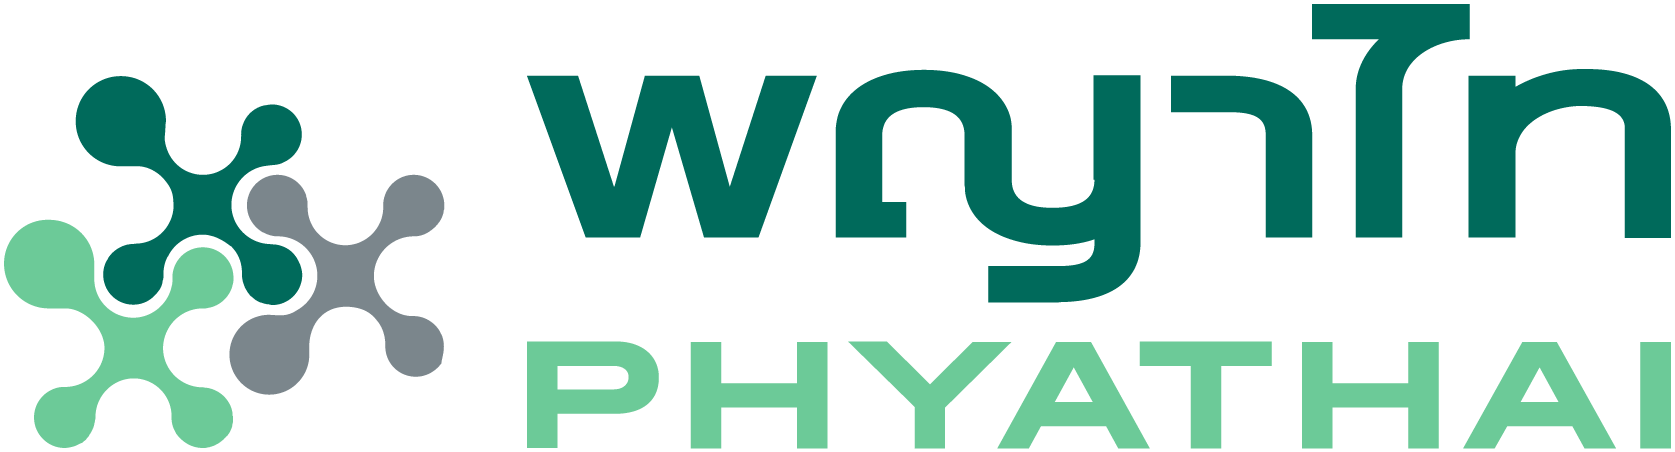 pyt logo